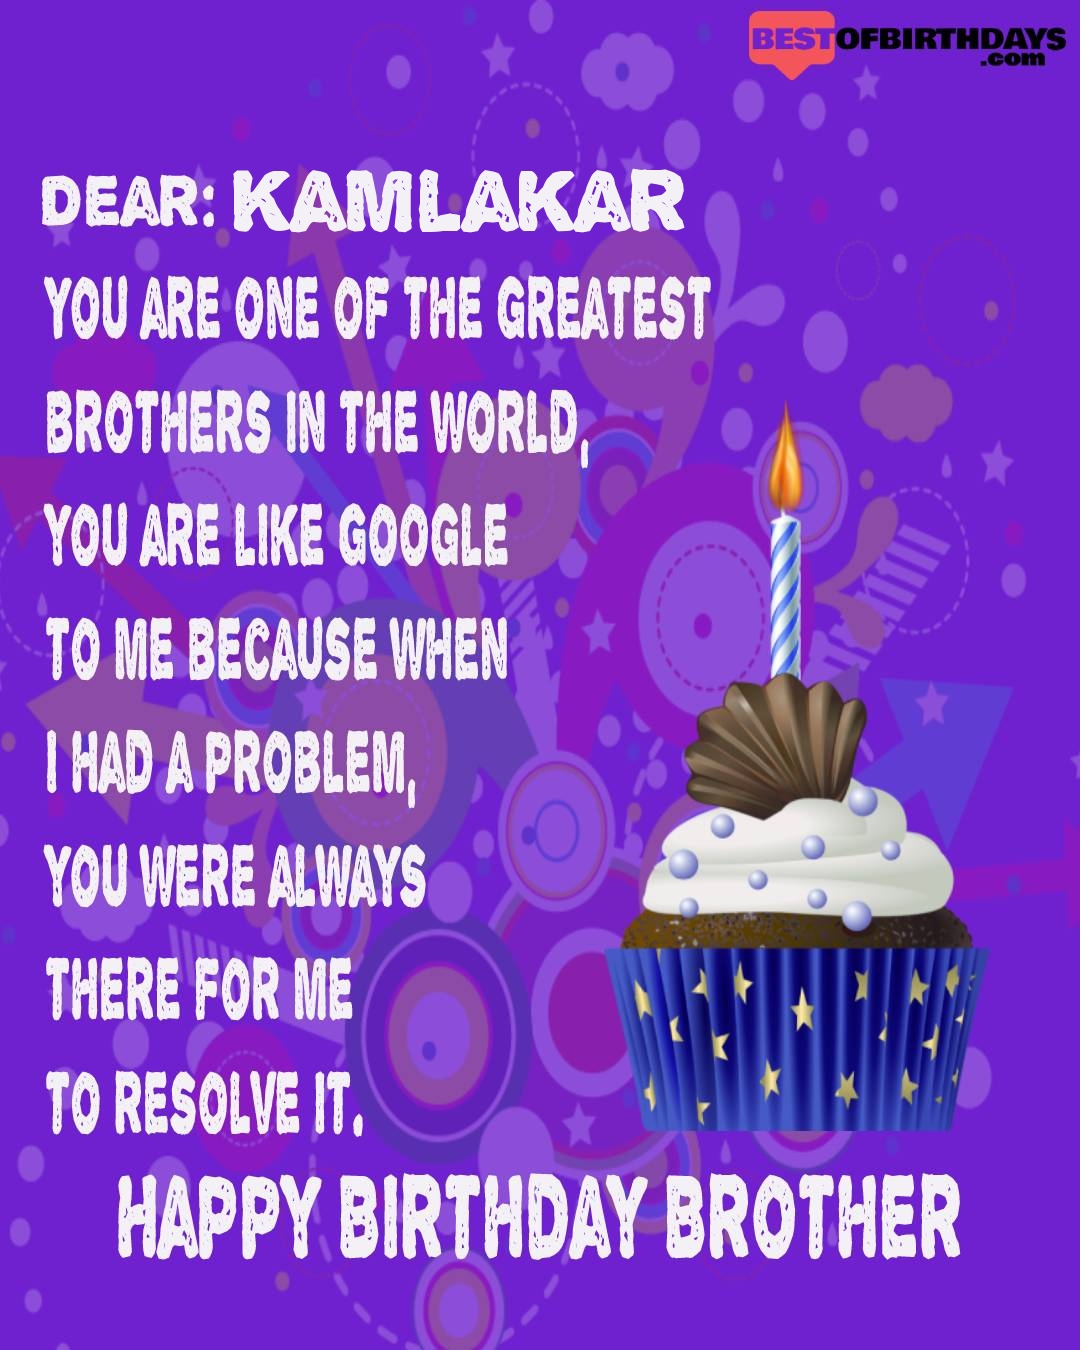 Happy birthday kamlakar bhai brother bro